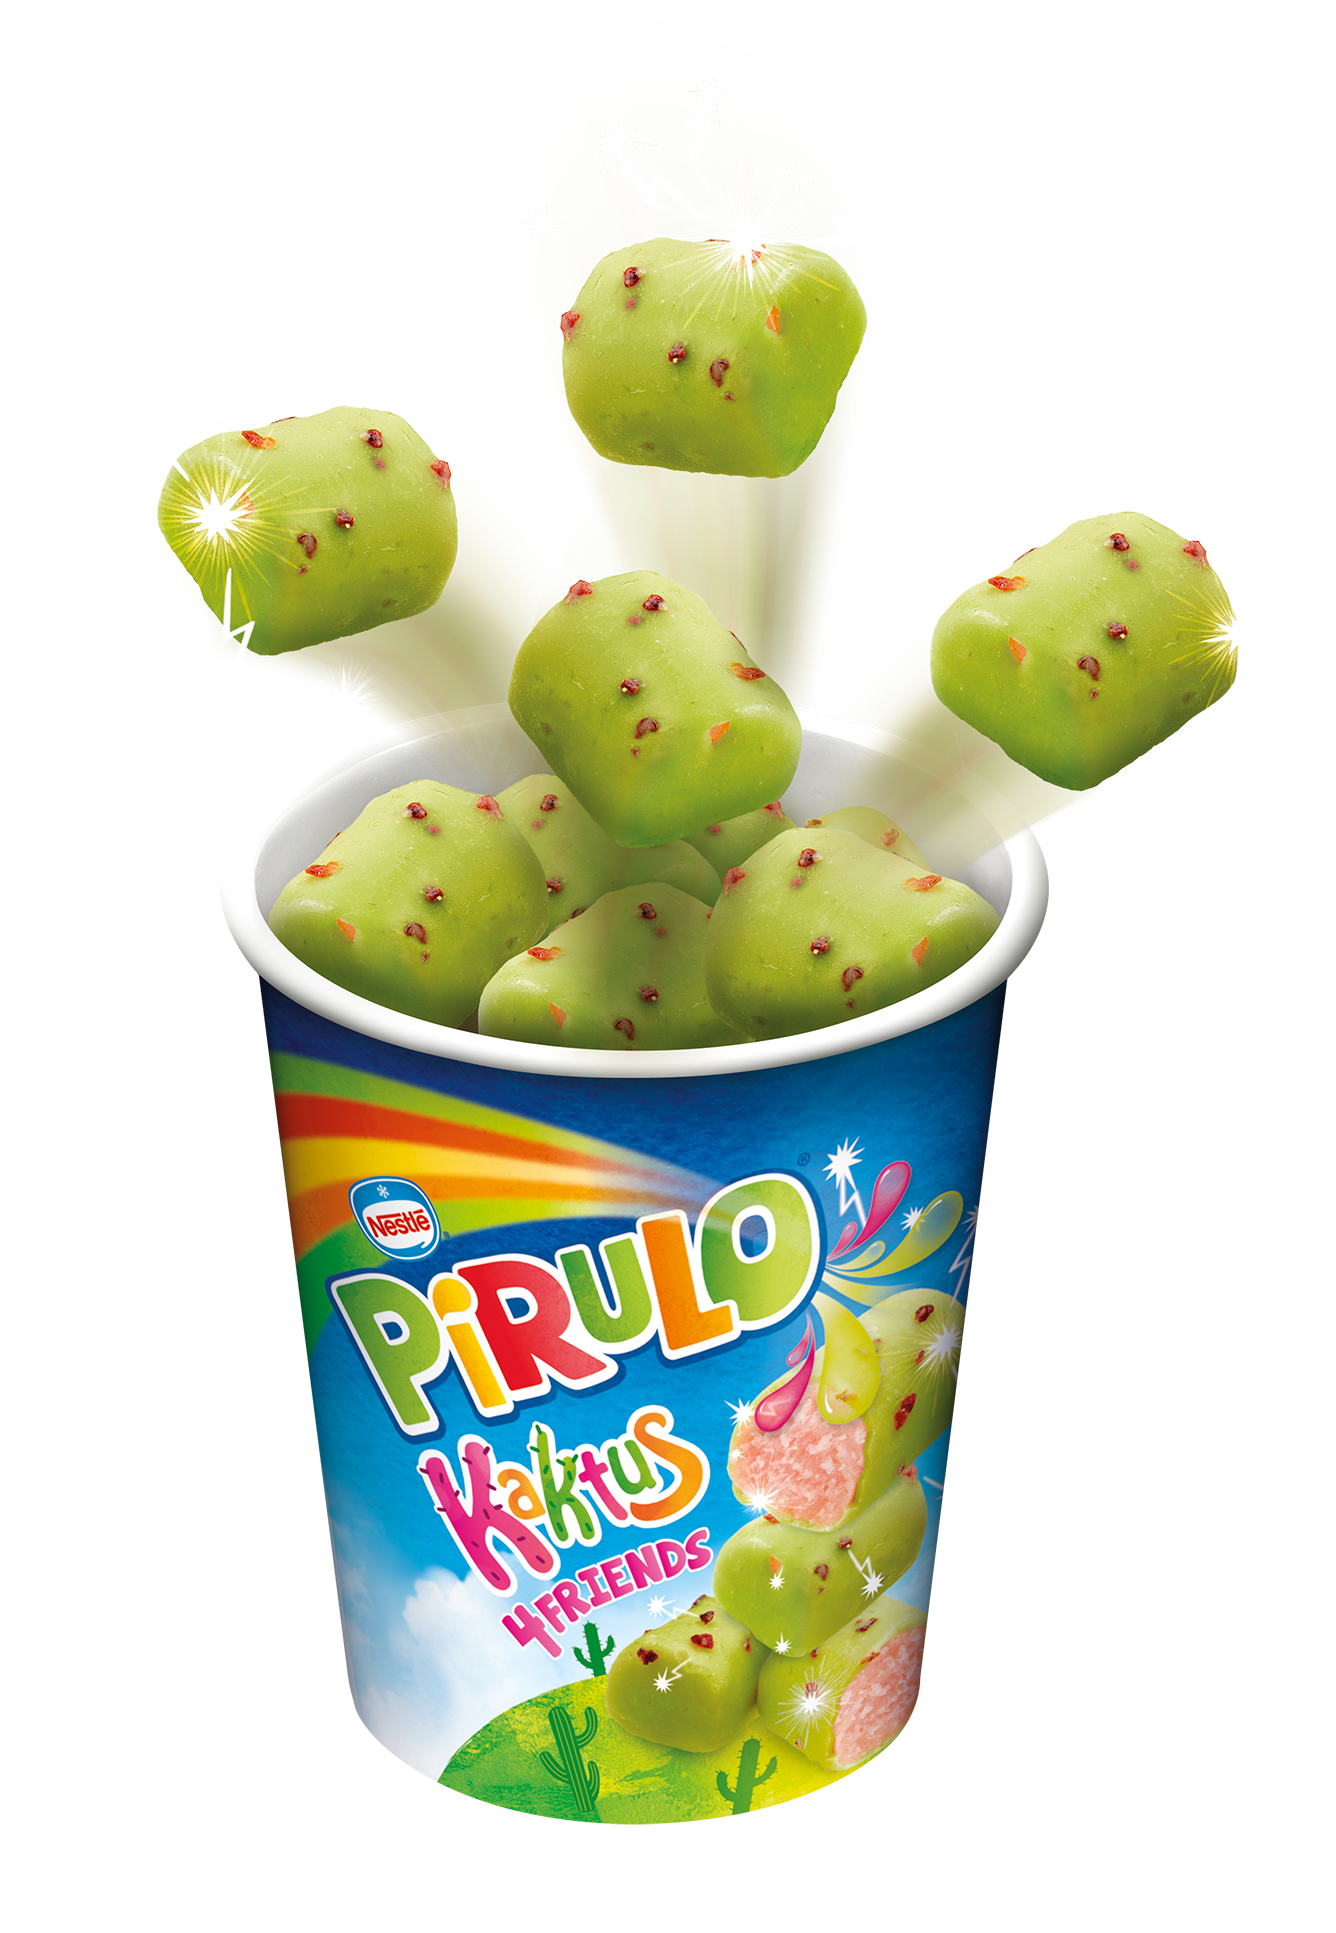 PIRULO Kaktus 4 Friends